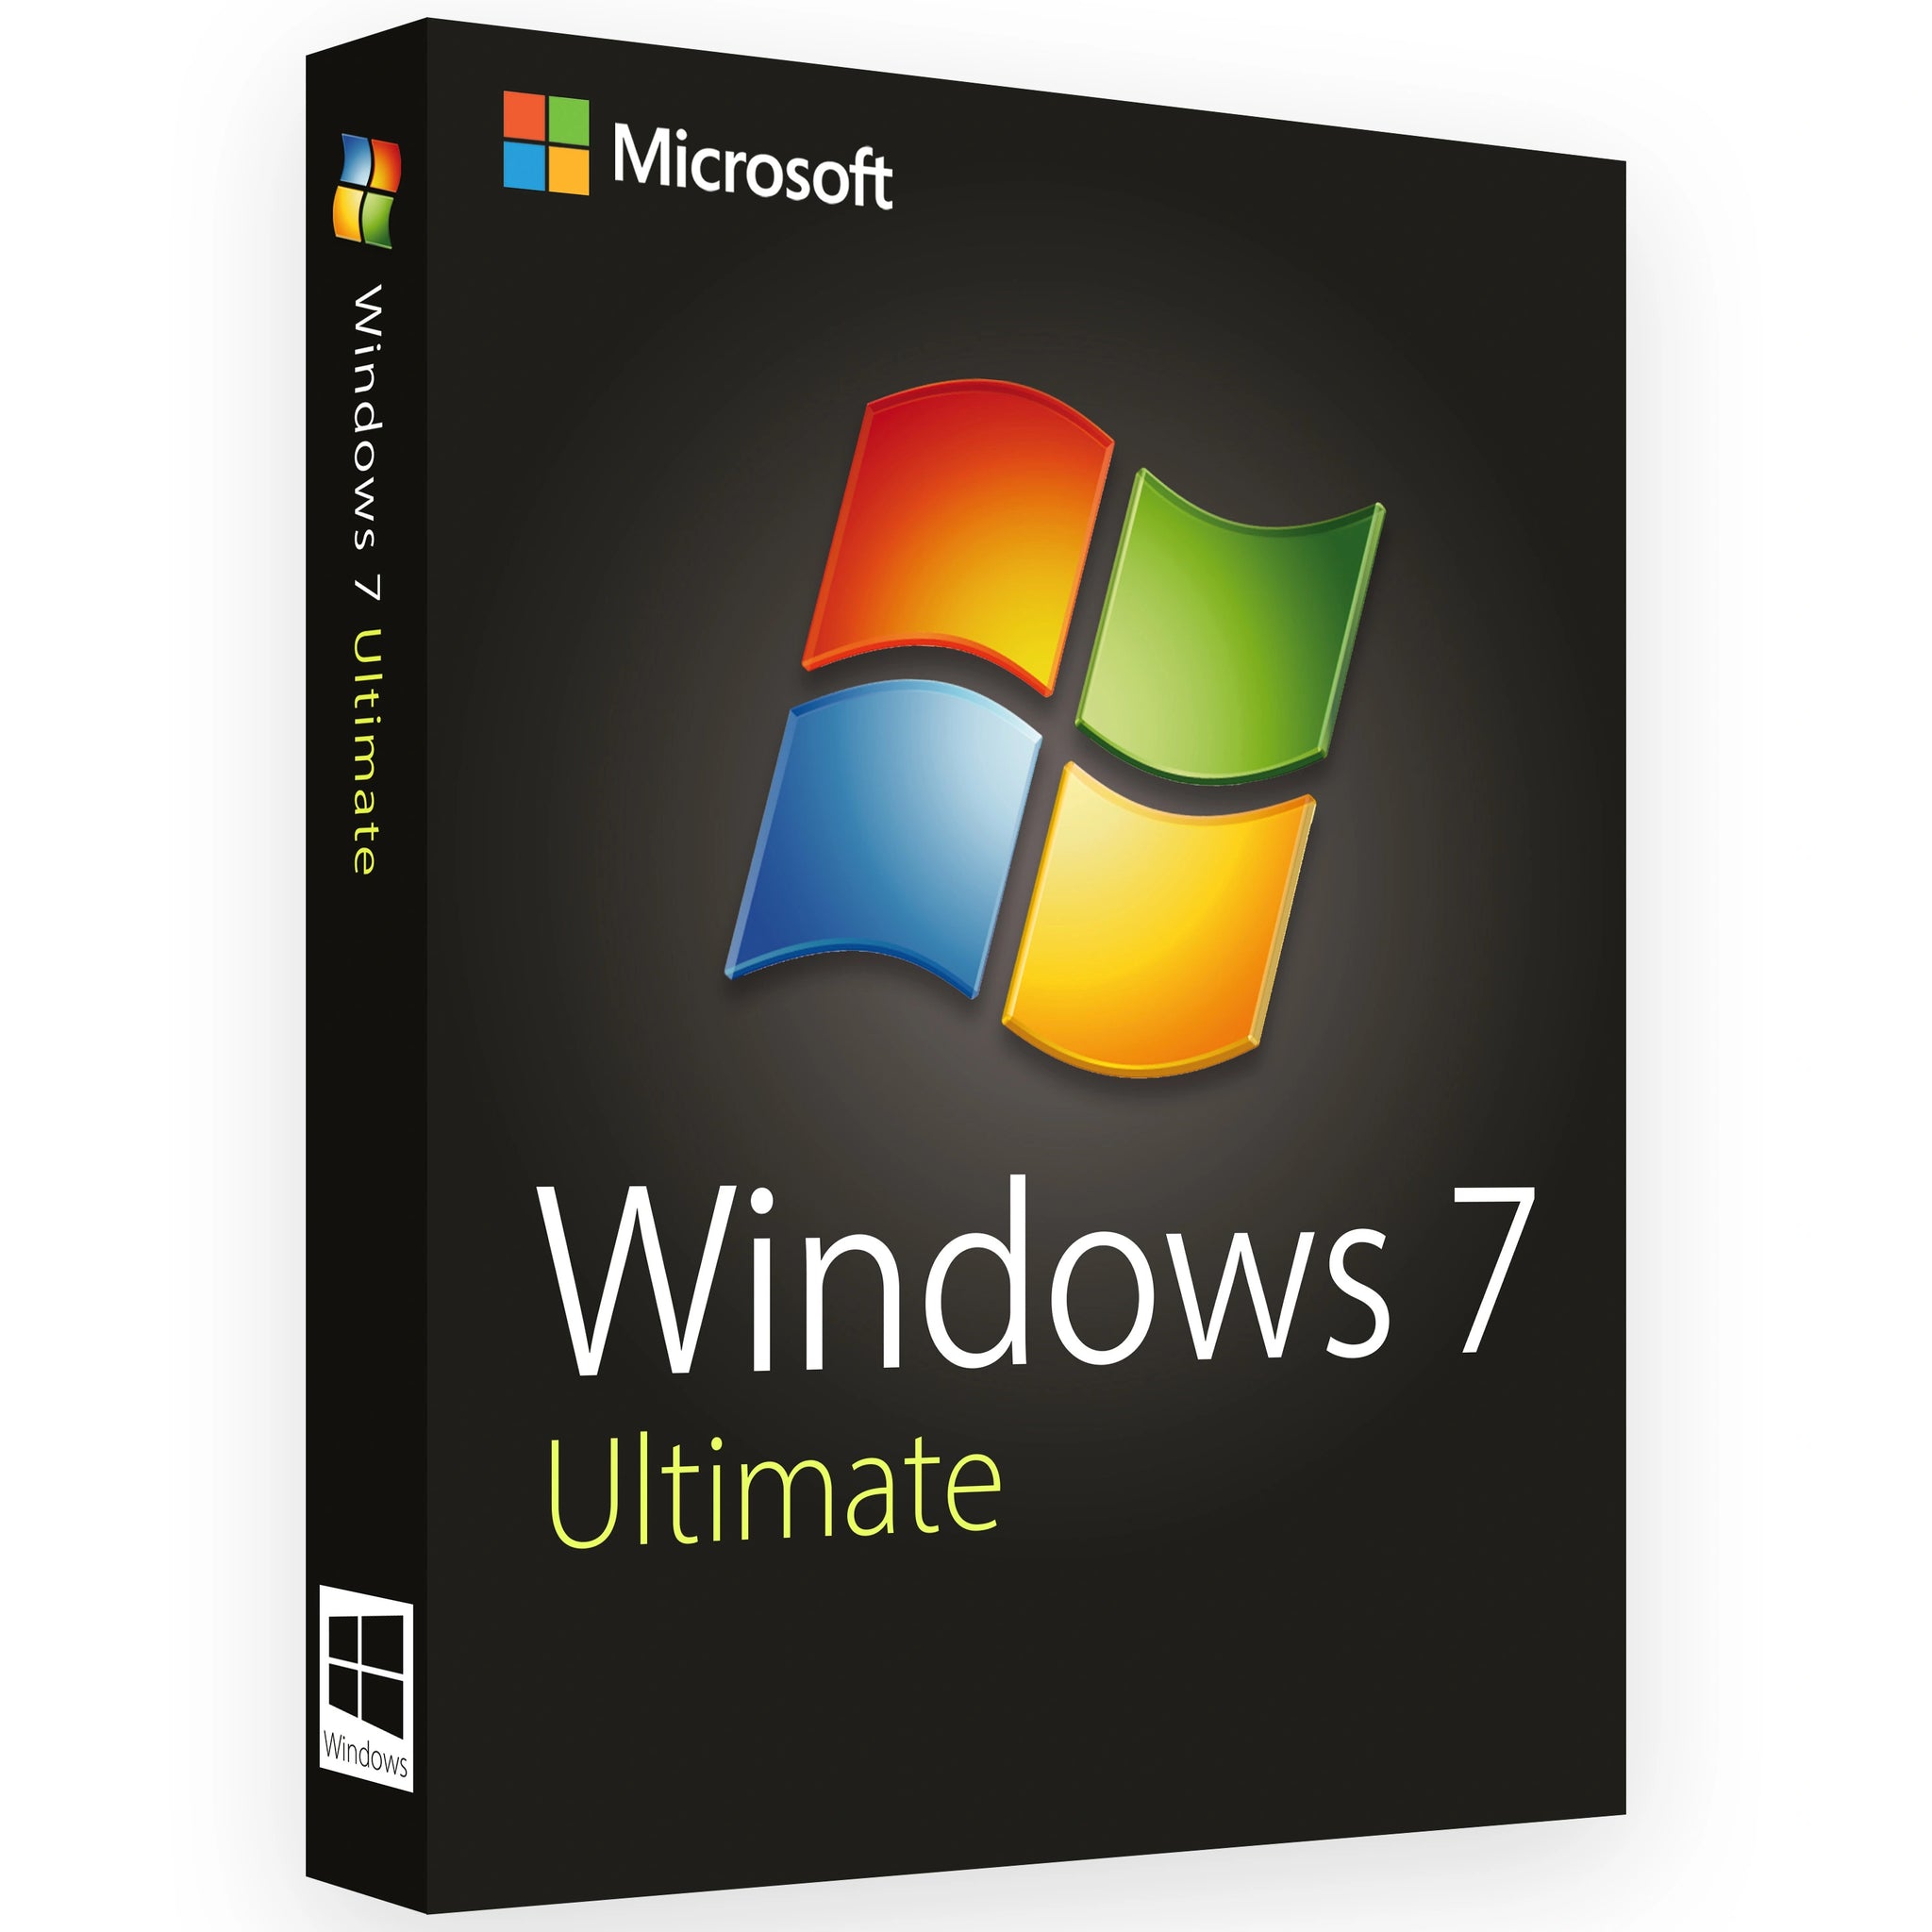 Microsoft Windows 7 Ultimate - Lifetime License Key for 1 PC